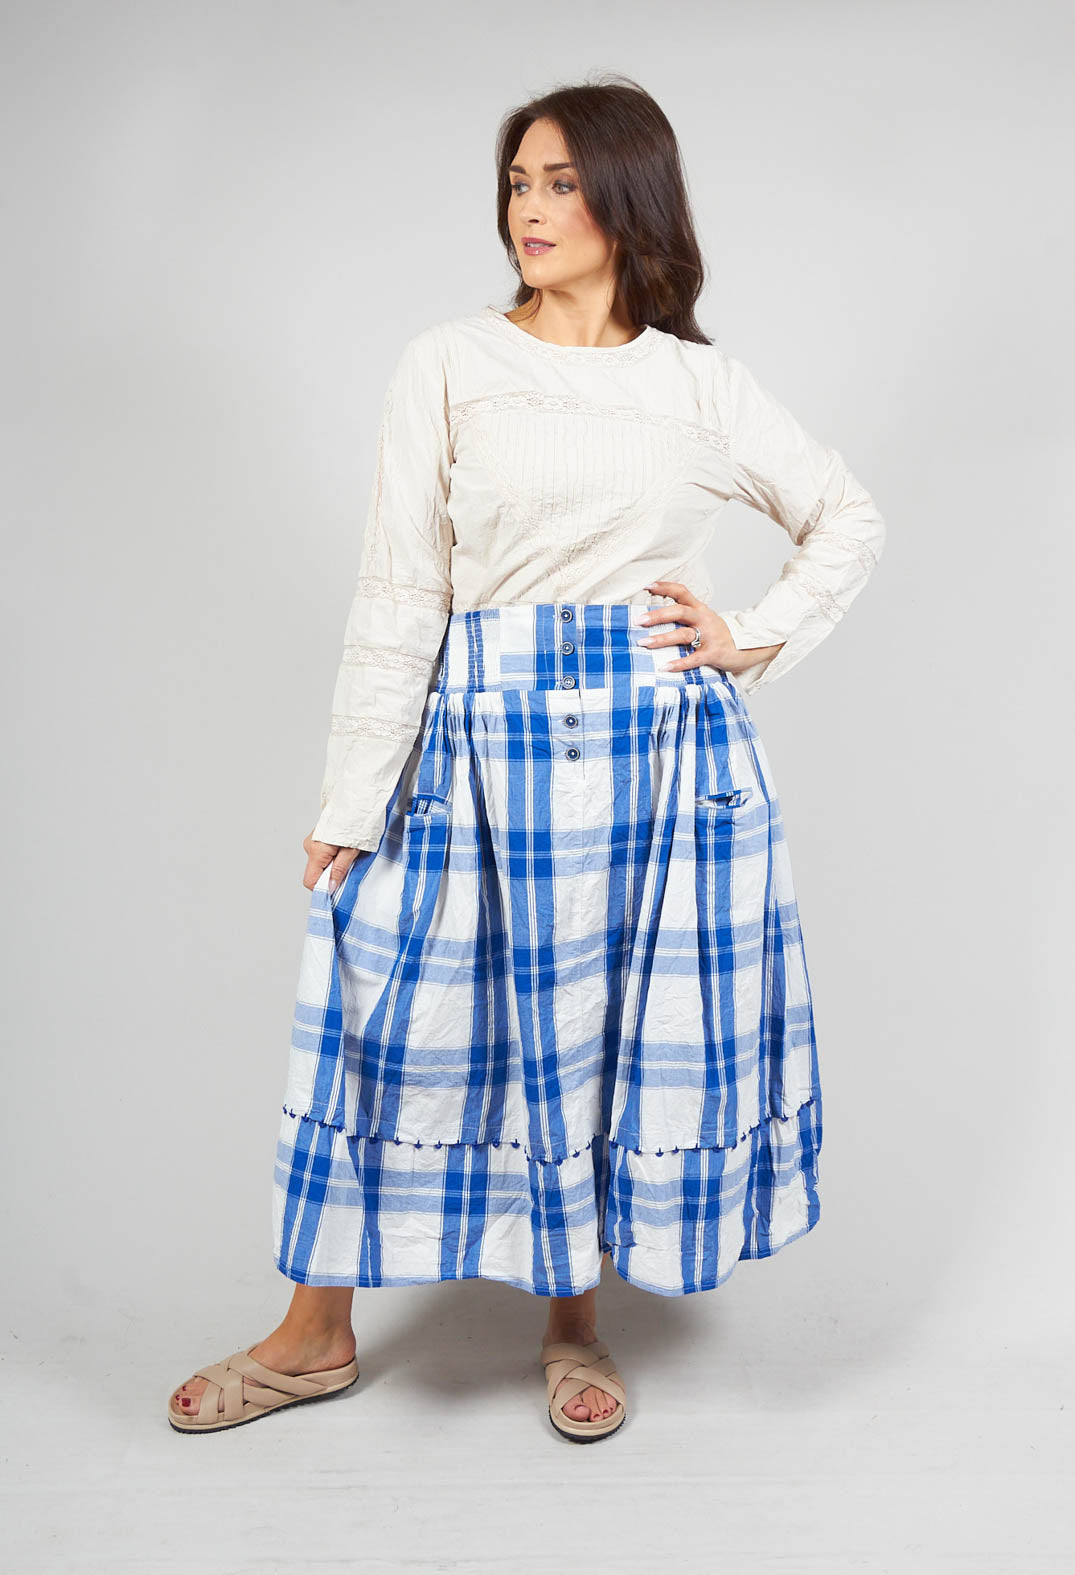 Bertin Skirt in Blue Checked Cotton